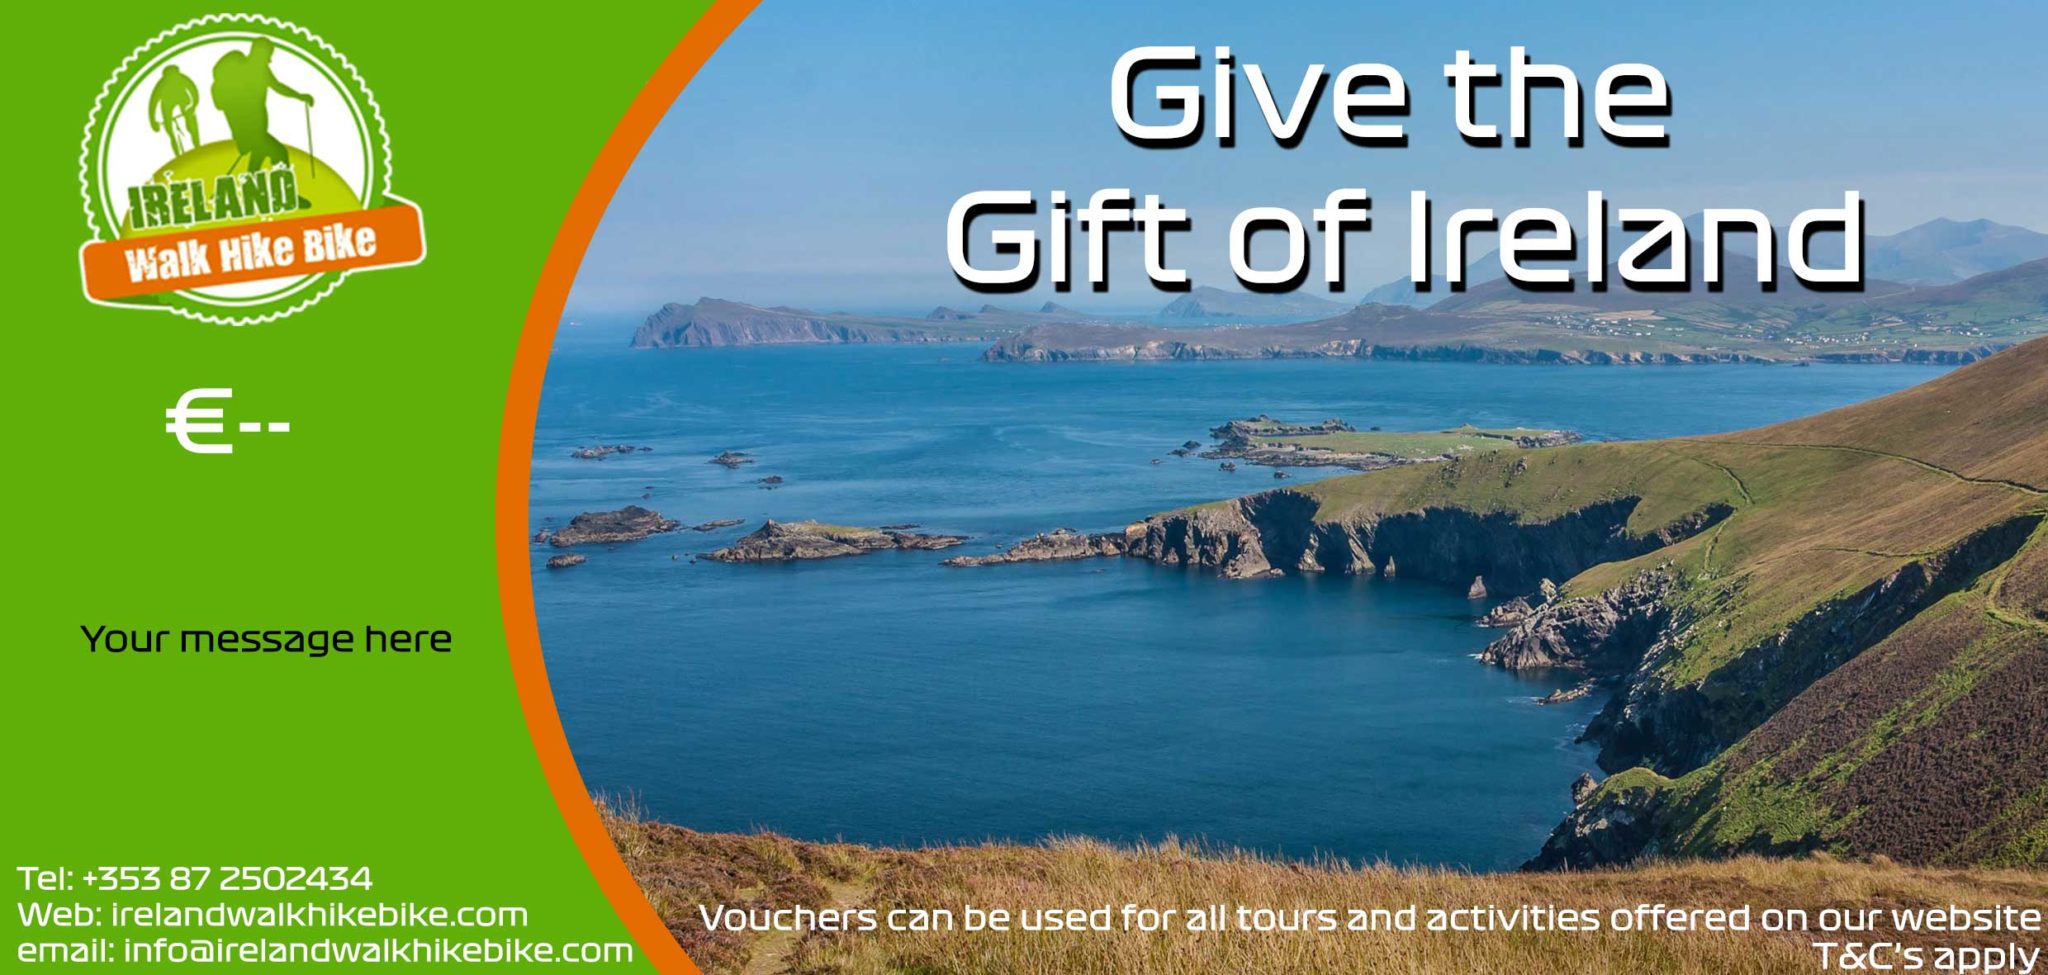 travel gift vouchers ireland